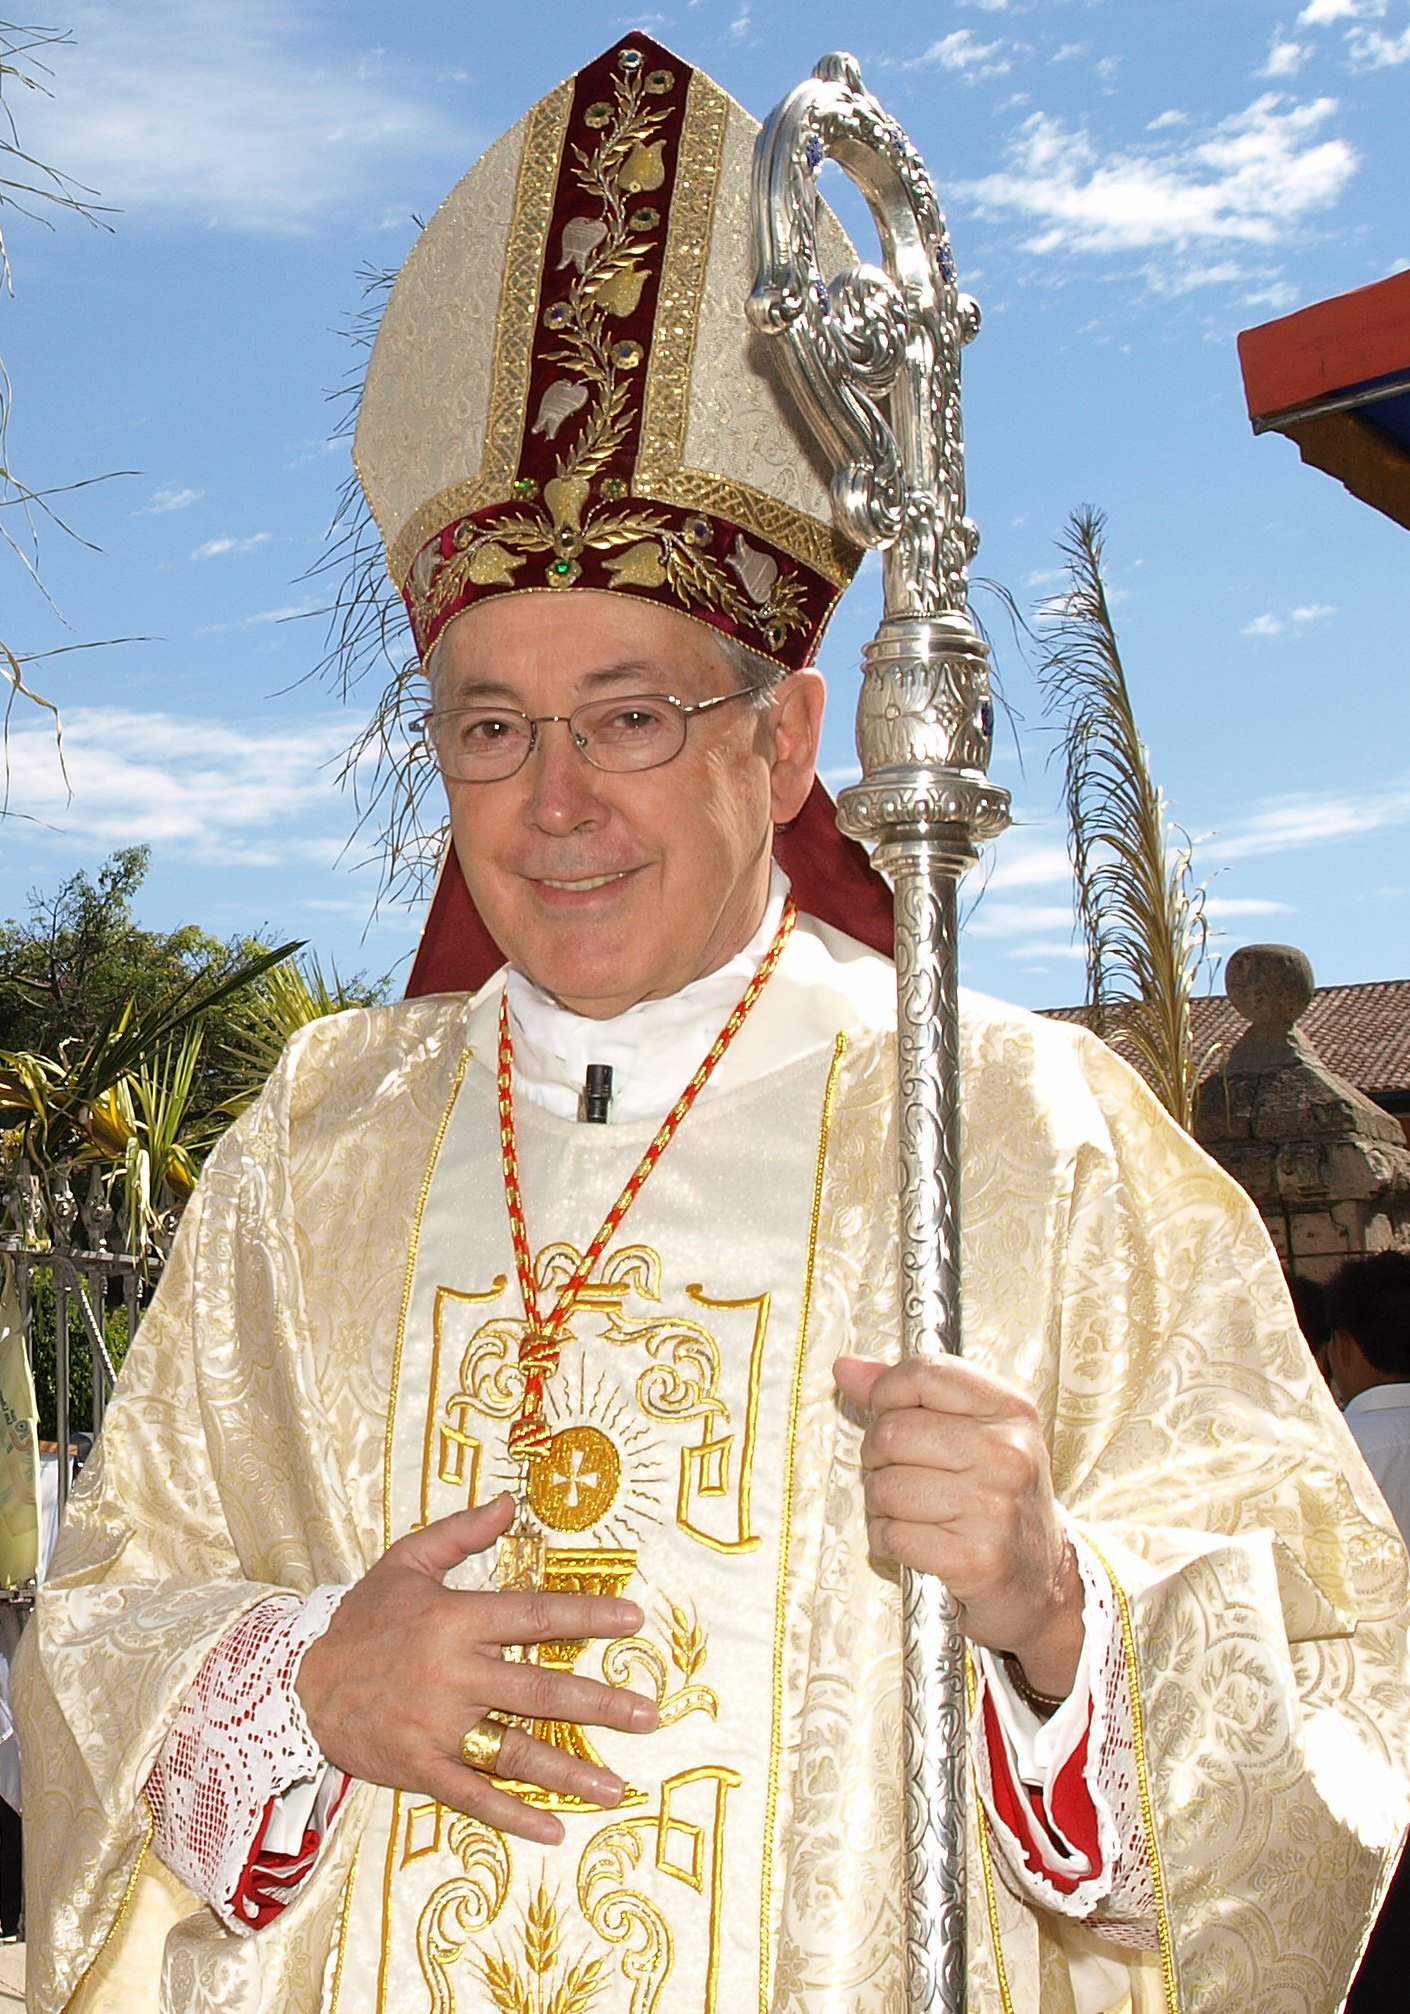  Juan Luis Cipriani, Peru's Catholic Cardinal, in traditional clothing.